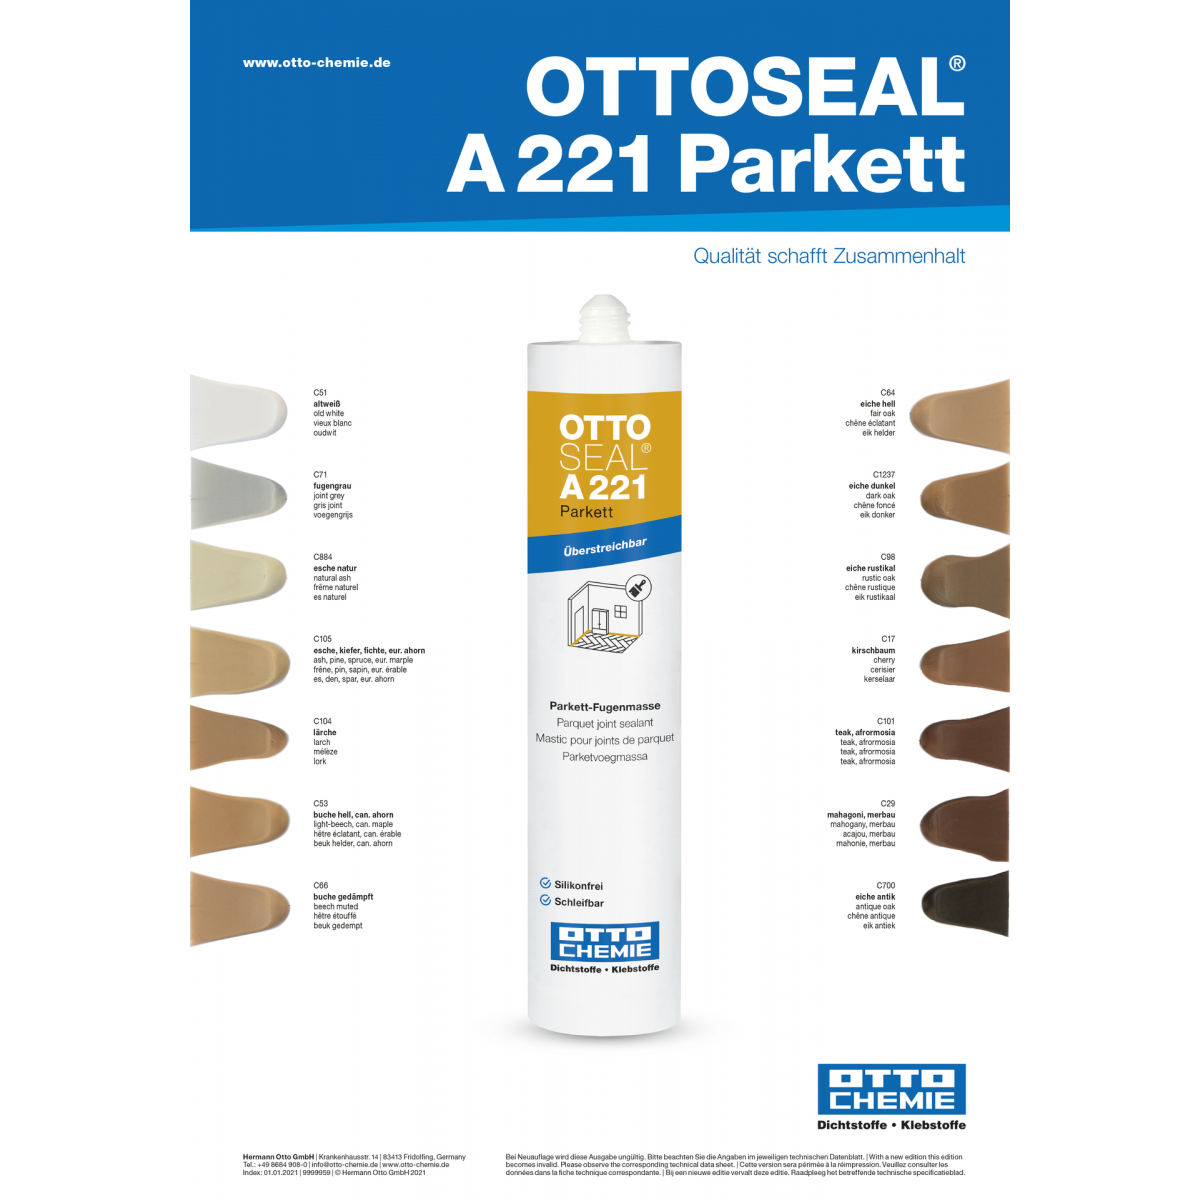 ottoseal-a221-parkett-kleurenkaart-kitcentrum.nl